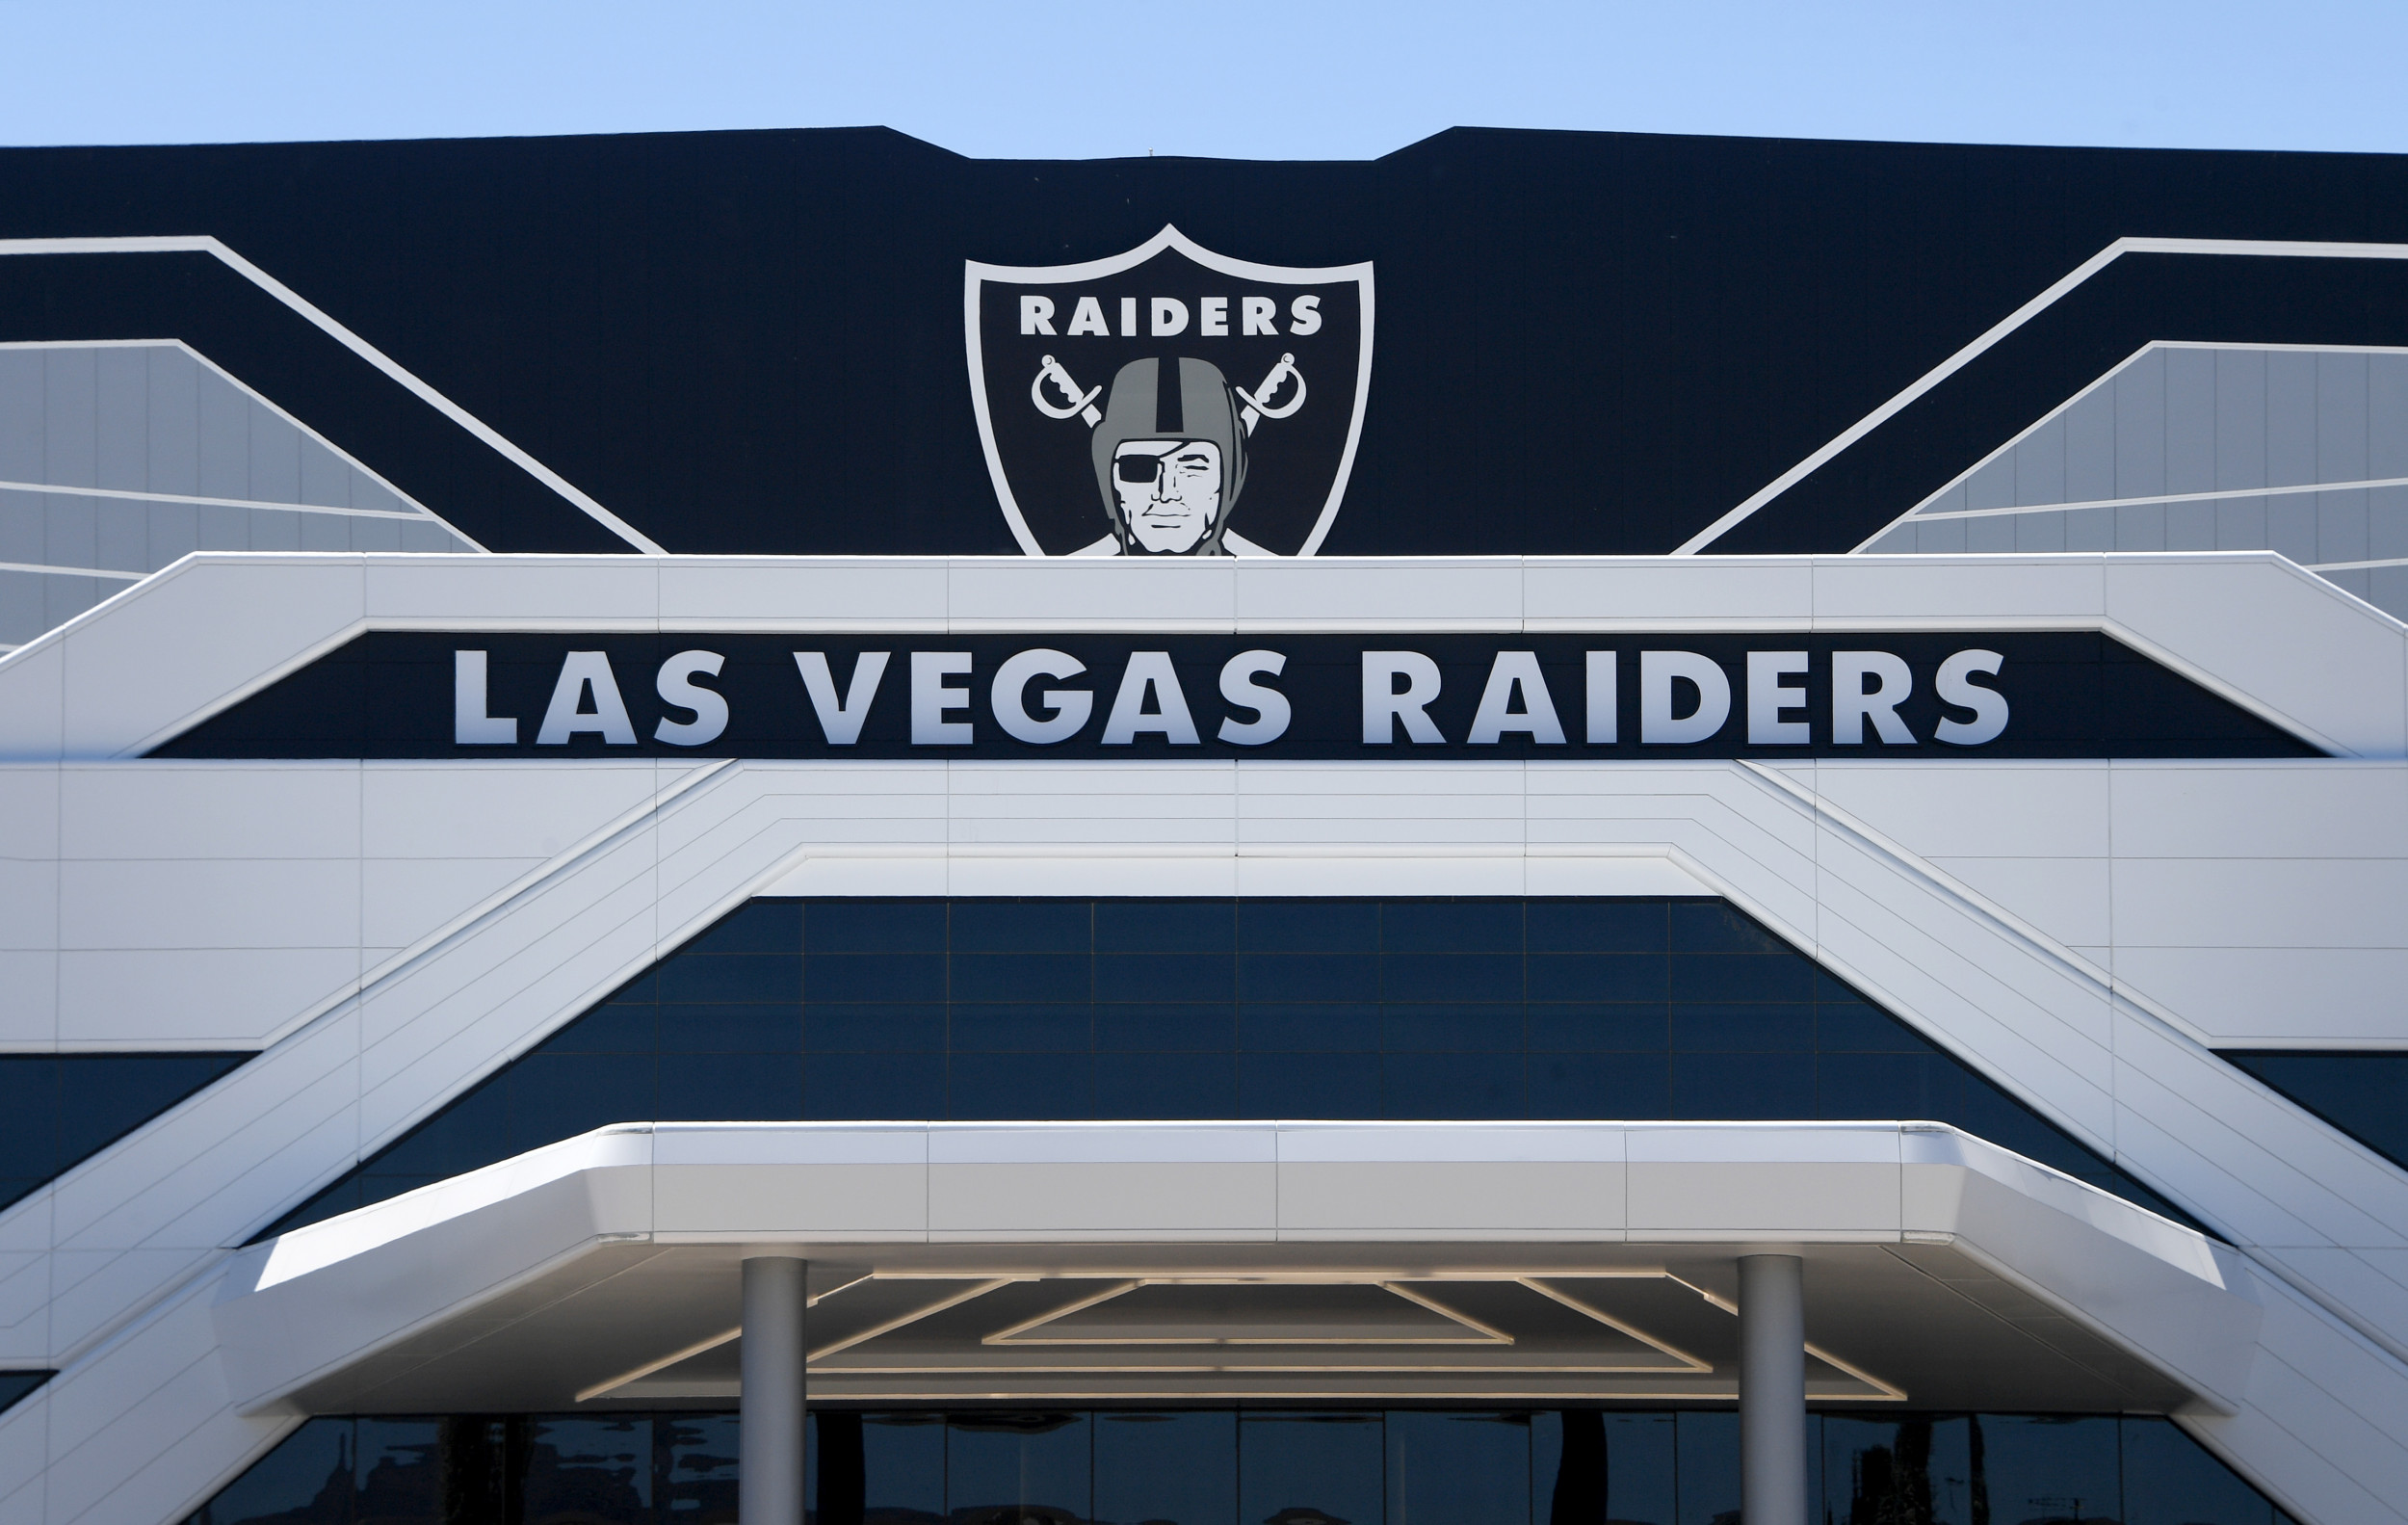 Las Vegas Raiders - Repping the city 